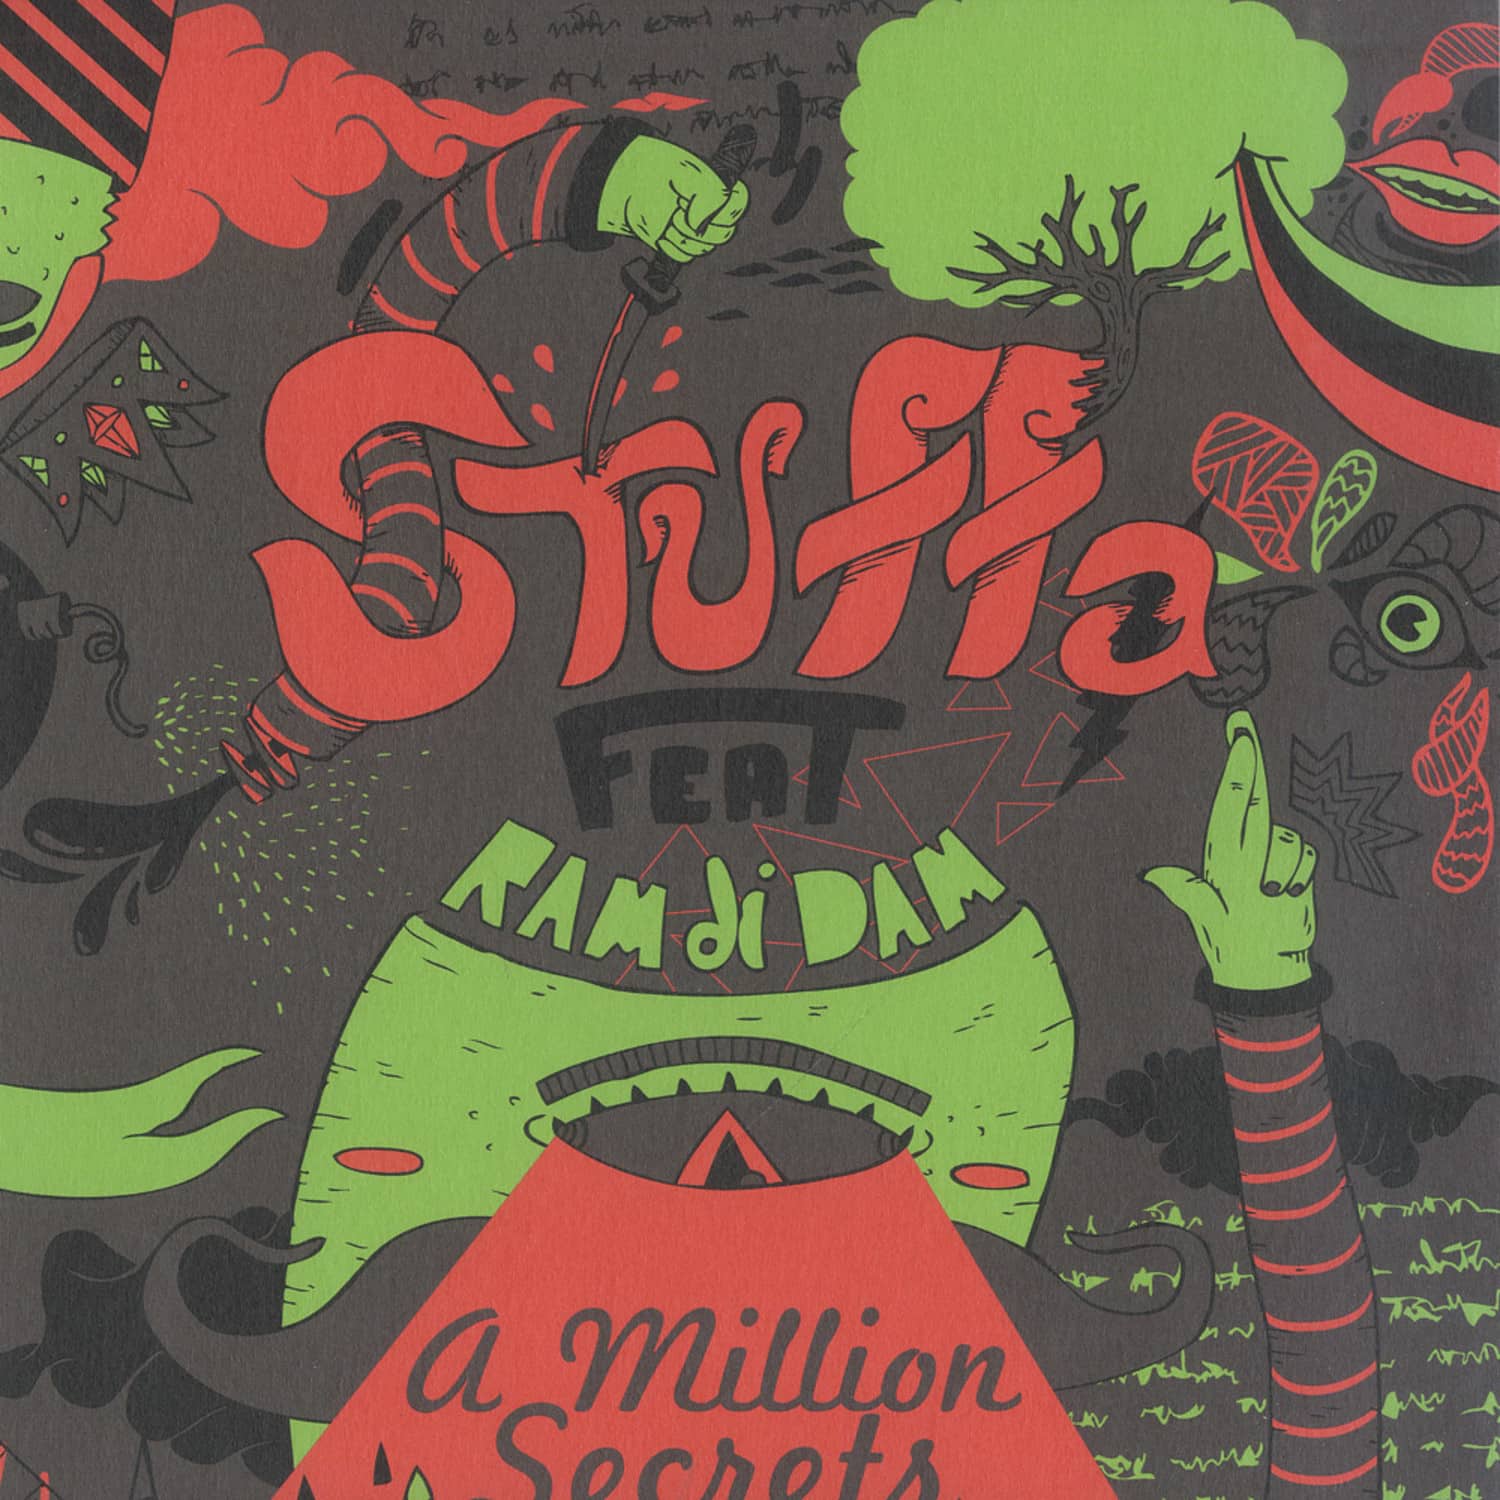 Stuffa feat. Ram Di Dam - A MILLION SECRETS / Ramon Tapia Rmx